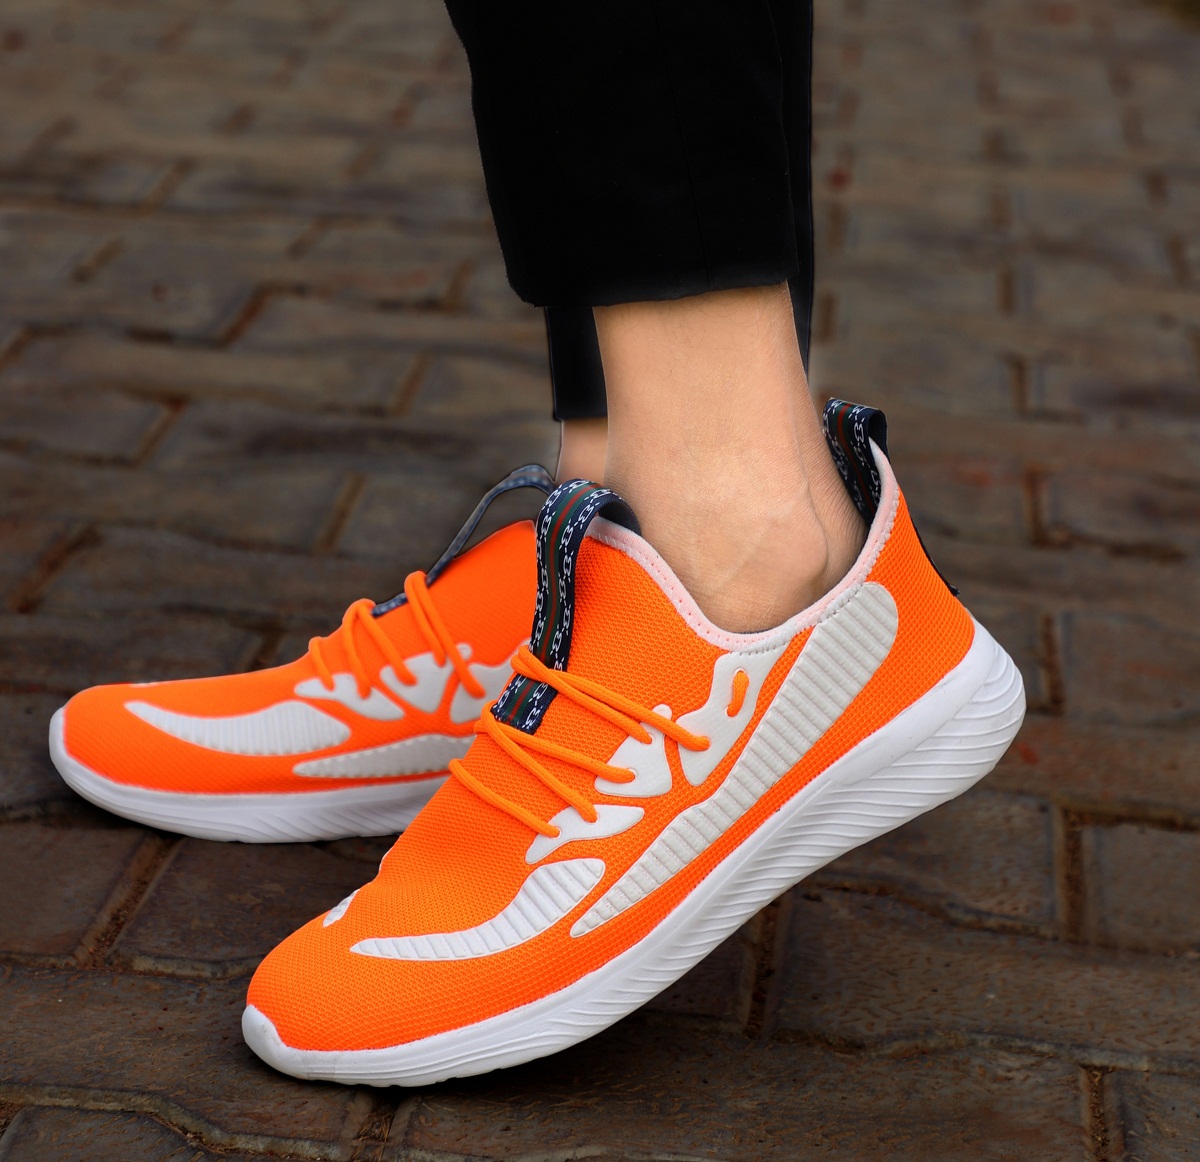 Buy FIRSTCLUB Men's Orange EVA Sole Light Weight Casual Shoes Online ...